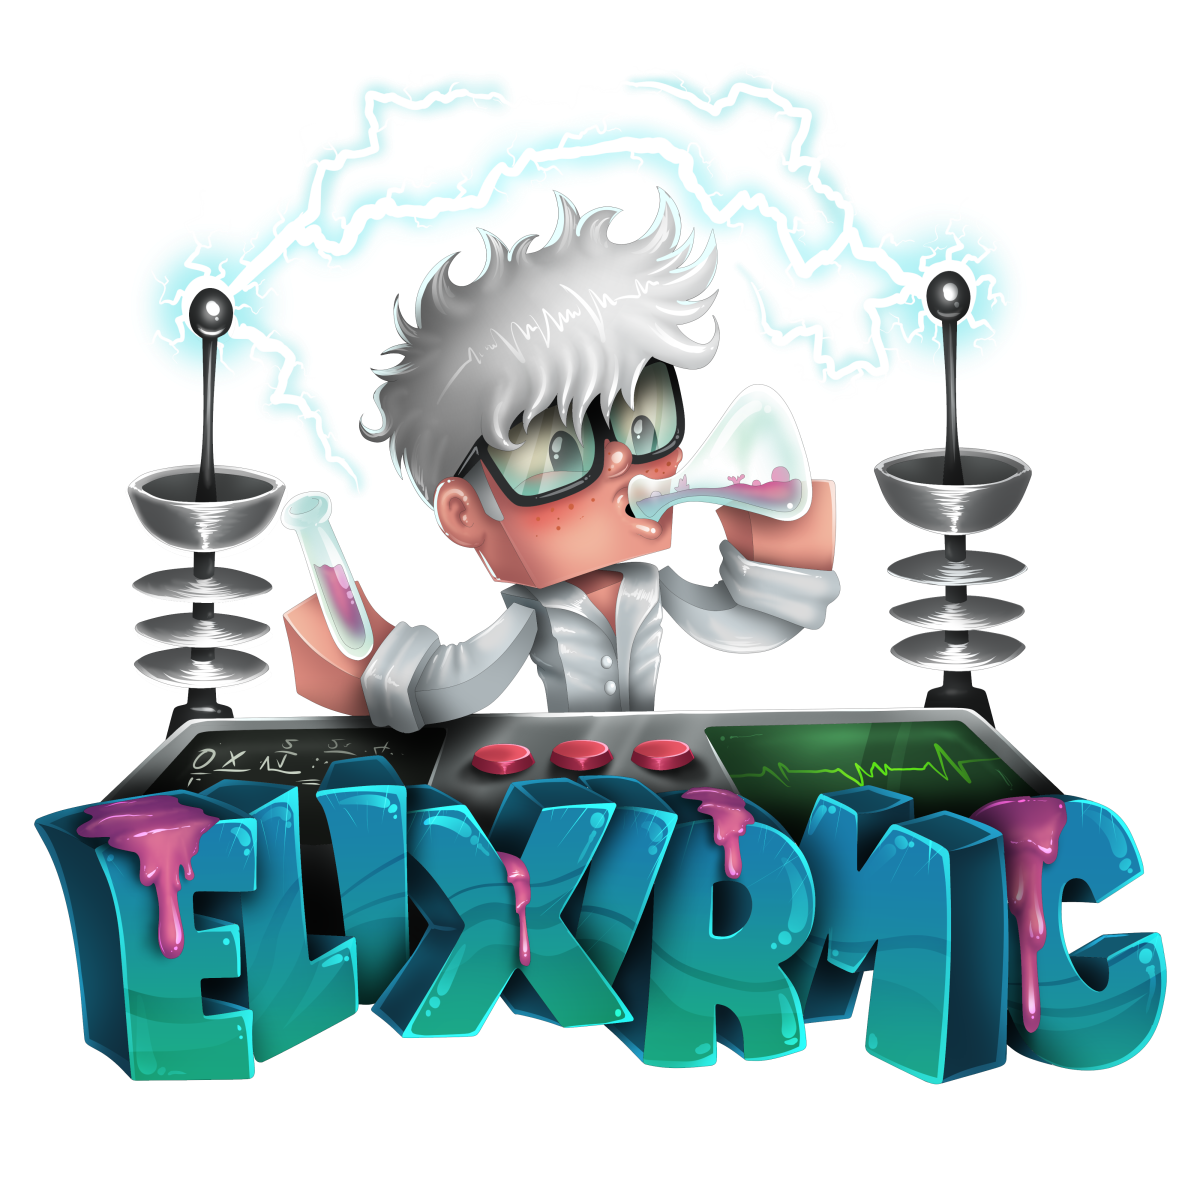 ElixirMC_logo.png